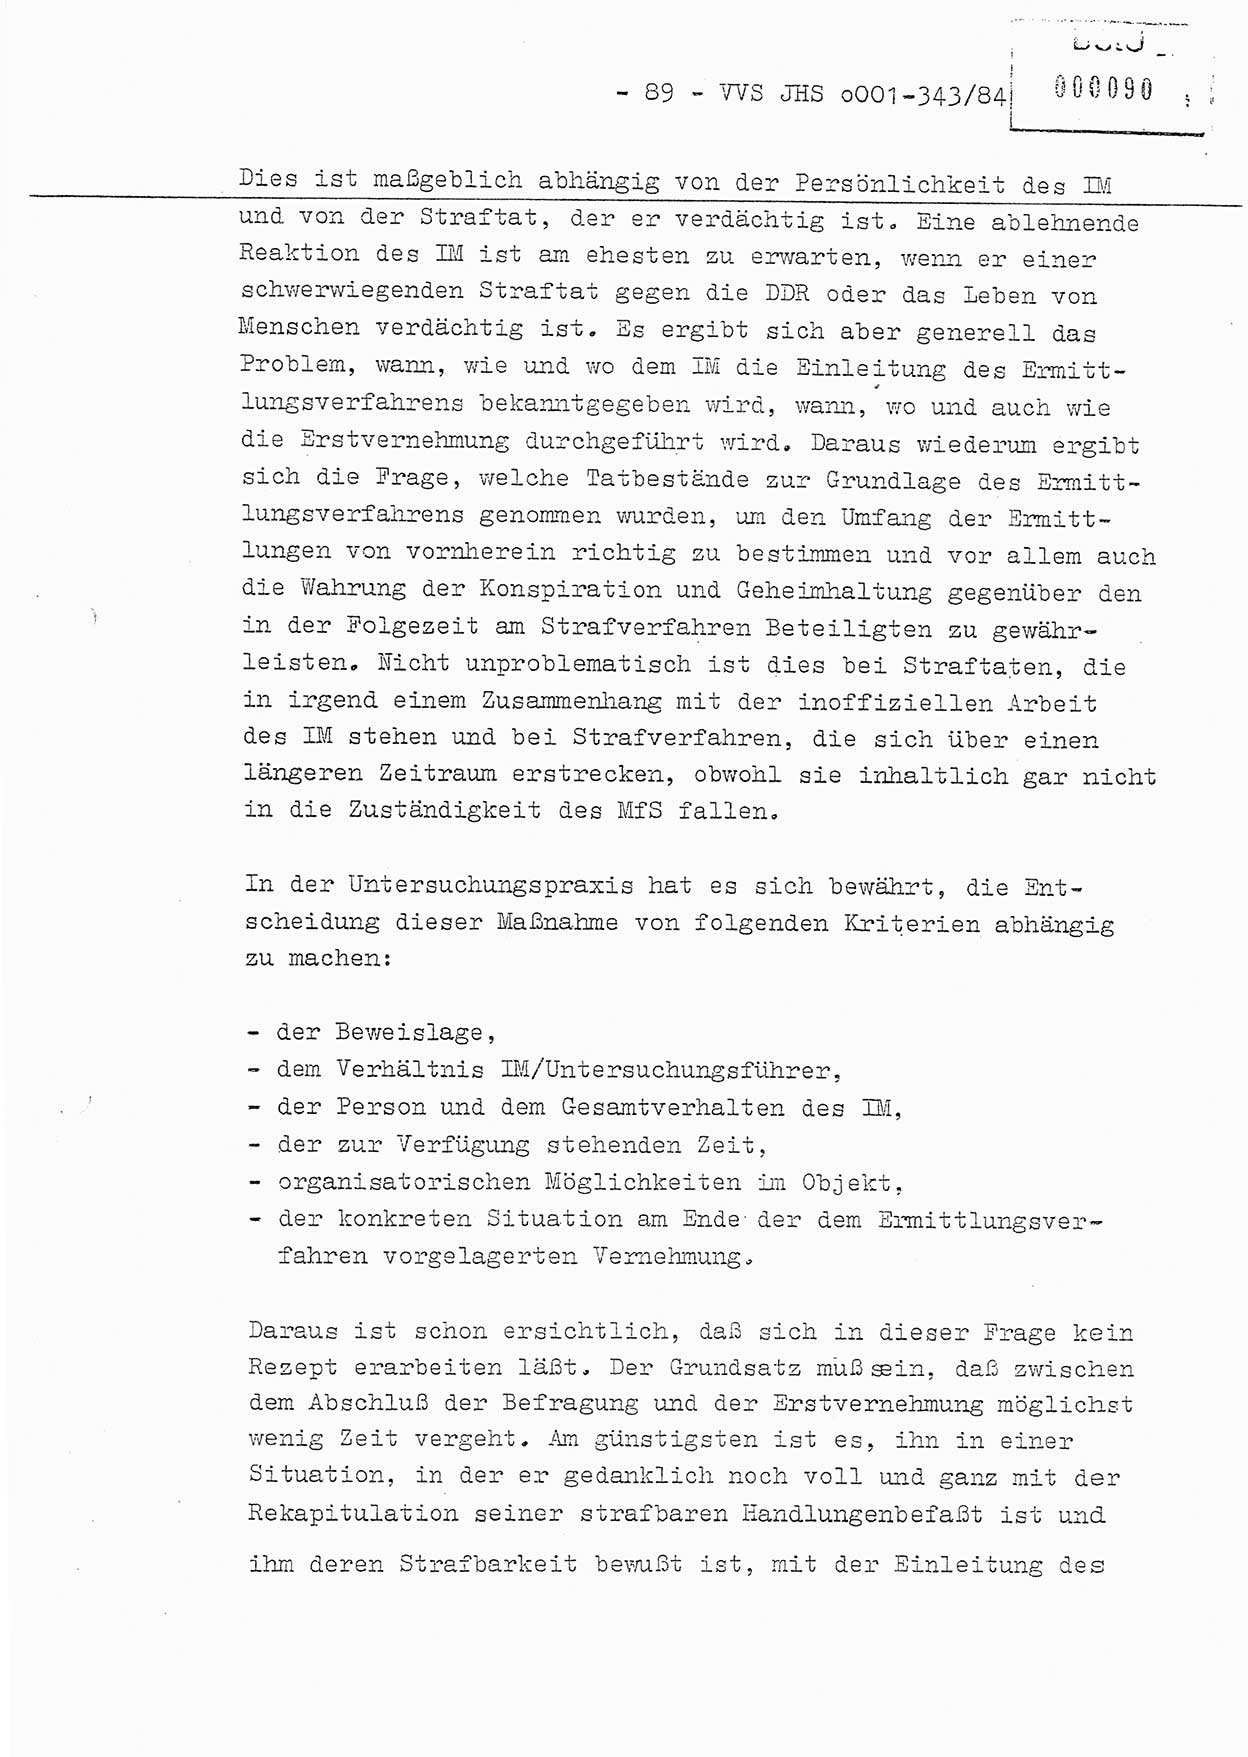 Diplomarbeit, Oberleutnant Bernd Michael (HA Ⅸ/5), Oberleutnant Peter Felber (HA IX/5), Ministerium für Staatssicherheit (MfS) [Deutsche Demokratische Republik (DDR)], Juristische Hochschule (JHS), Vertrauliche Verschlußsache (VVS) o001-343/84, Potsdam 1985, Seite 89 (Dipl.-Arb. MfS DDR JHS VVS o001-343/84 1985, S. 89)